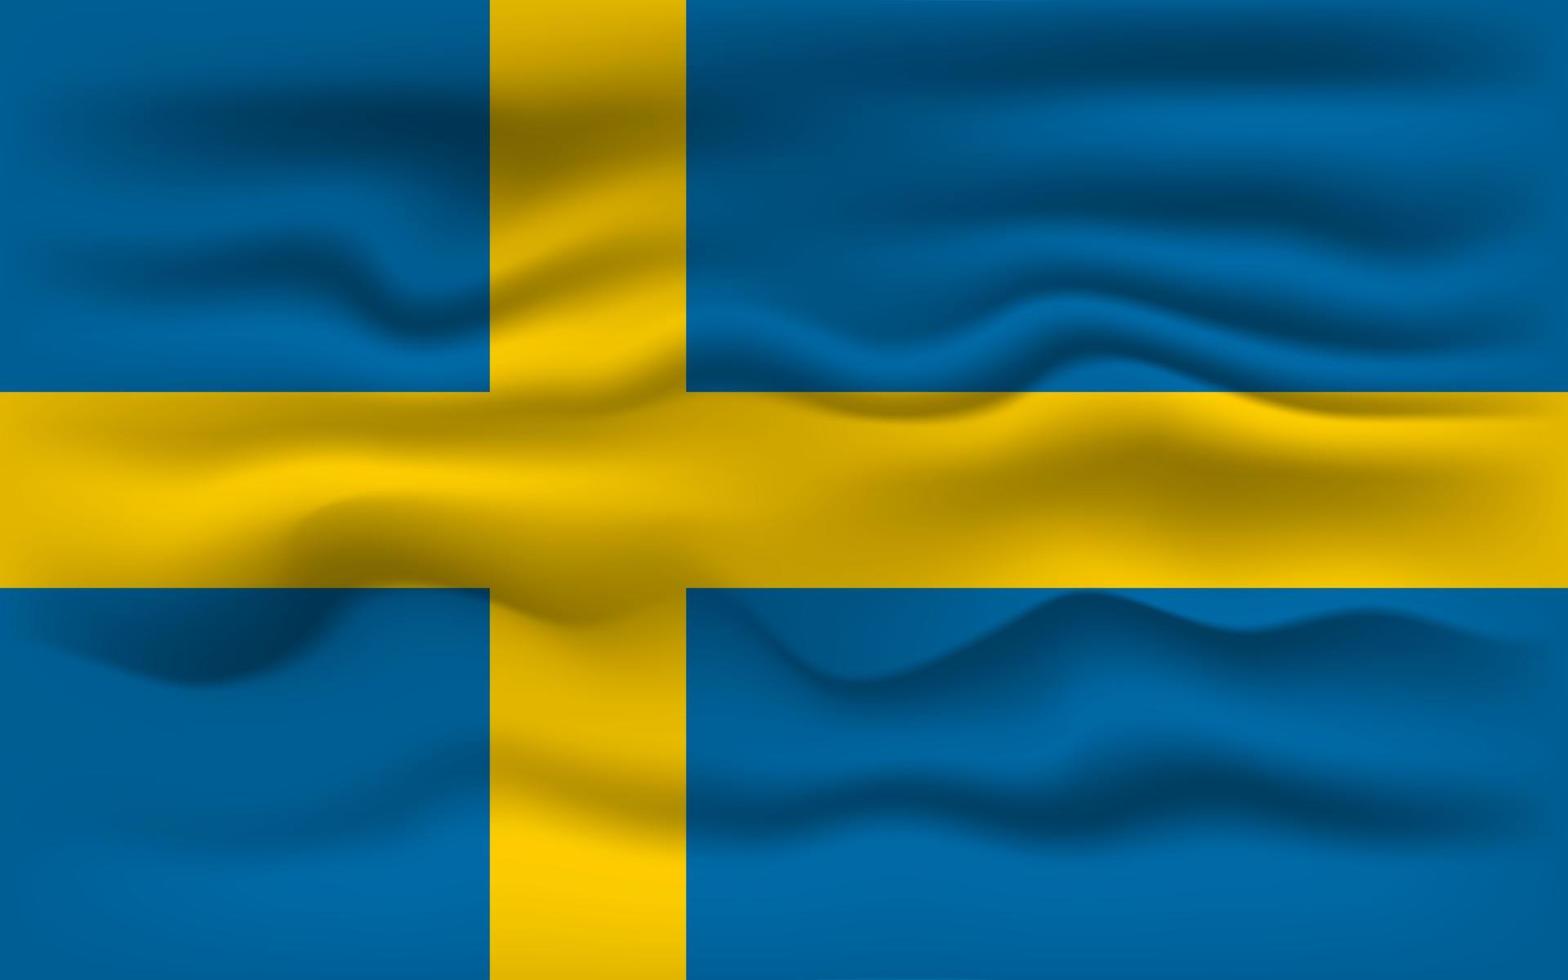 vinka flagga av de Land Sverige. vektor illustration.